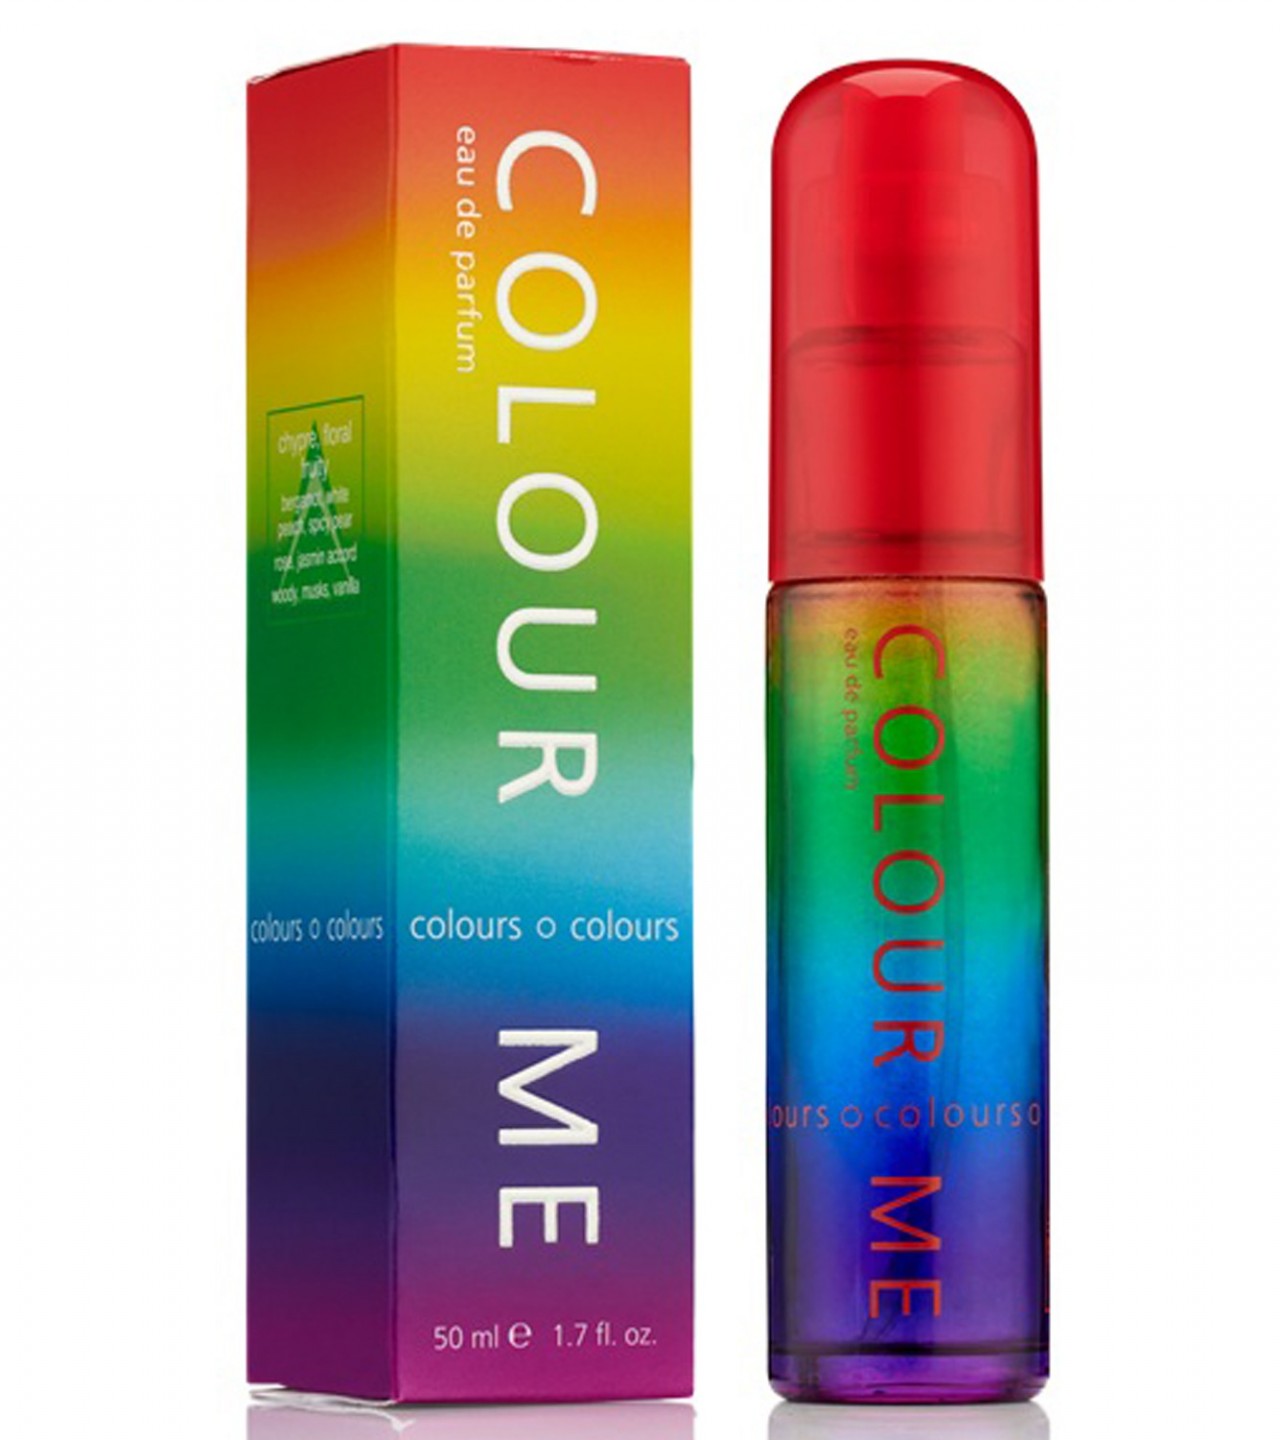 Milton Lloyd Colour Me Colours Perfume For Women – 50 ml